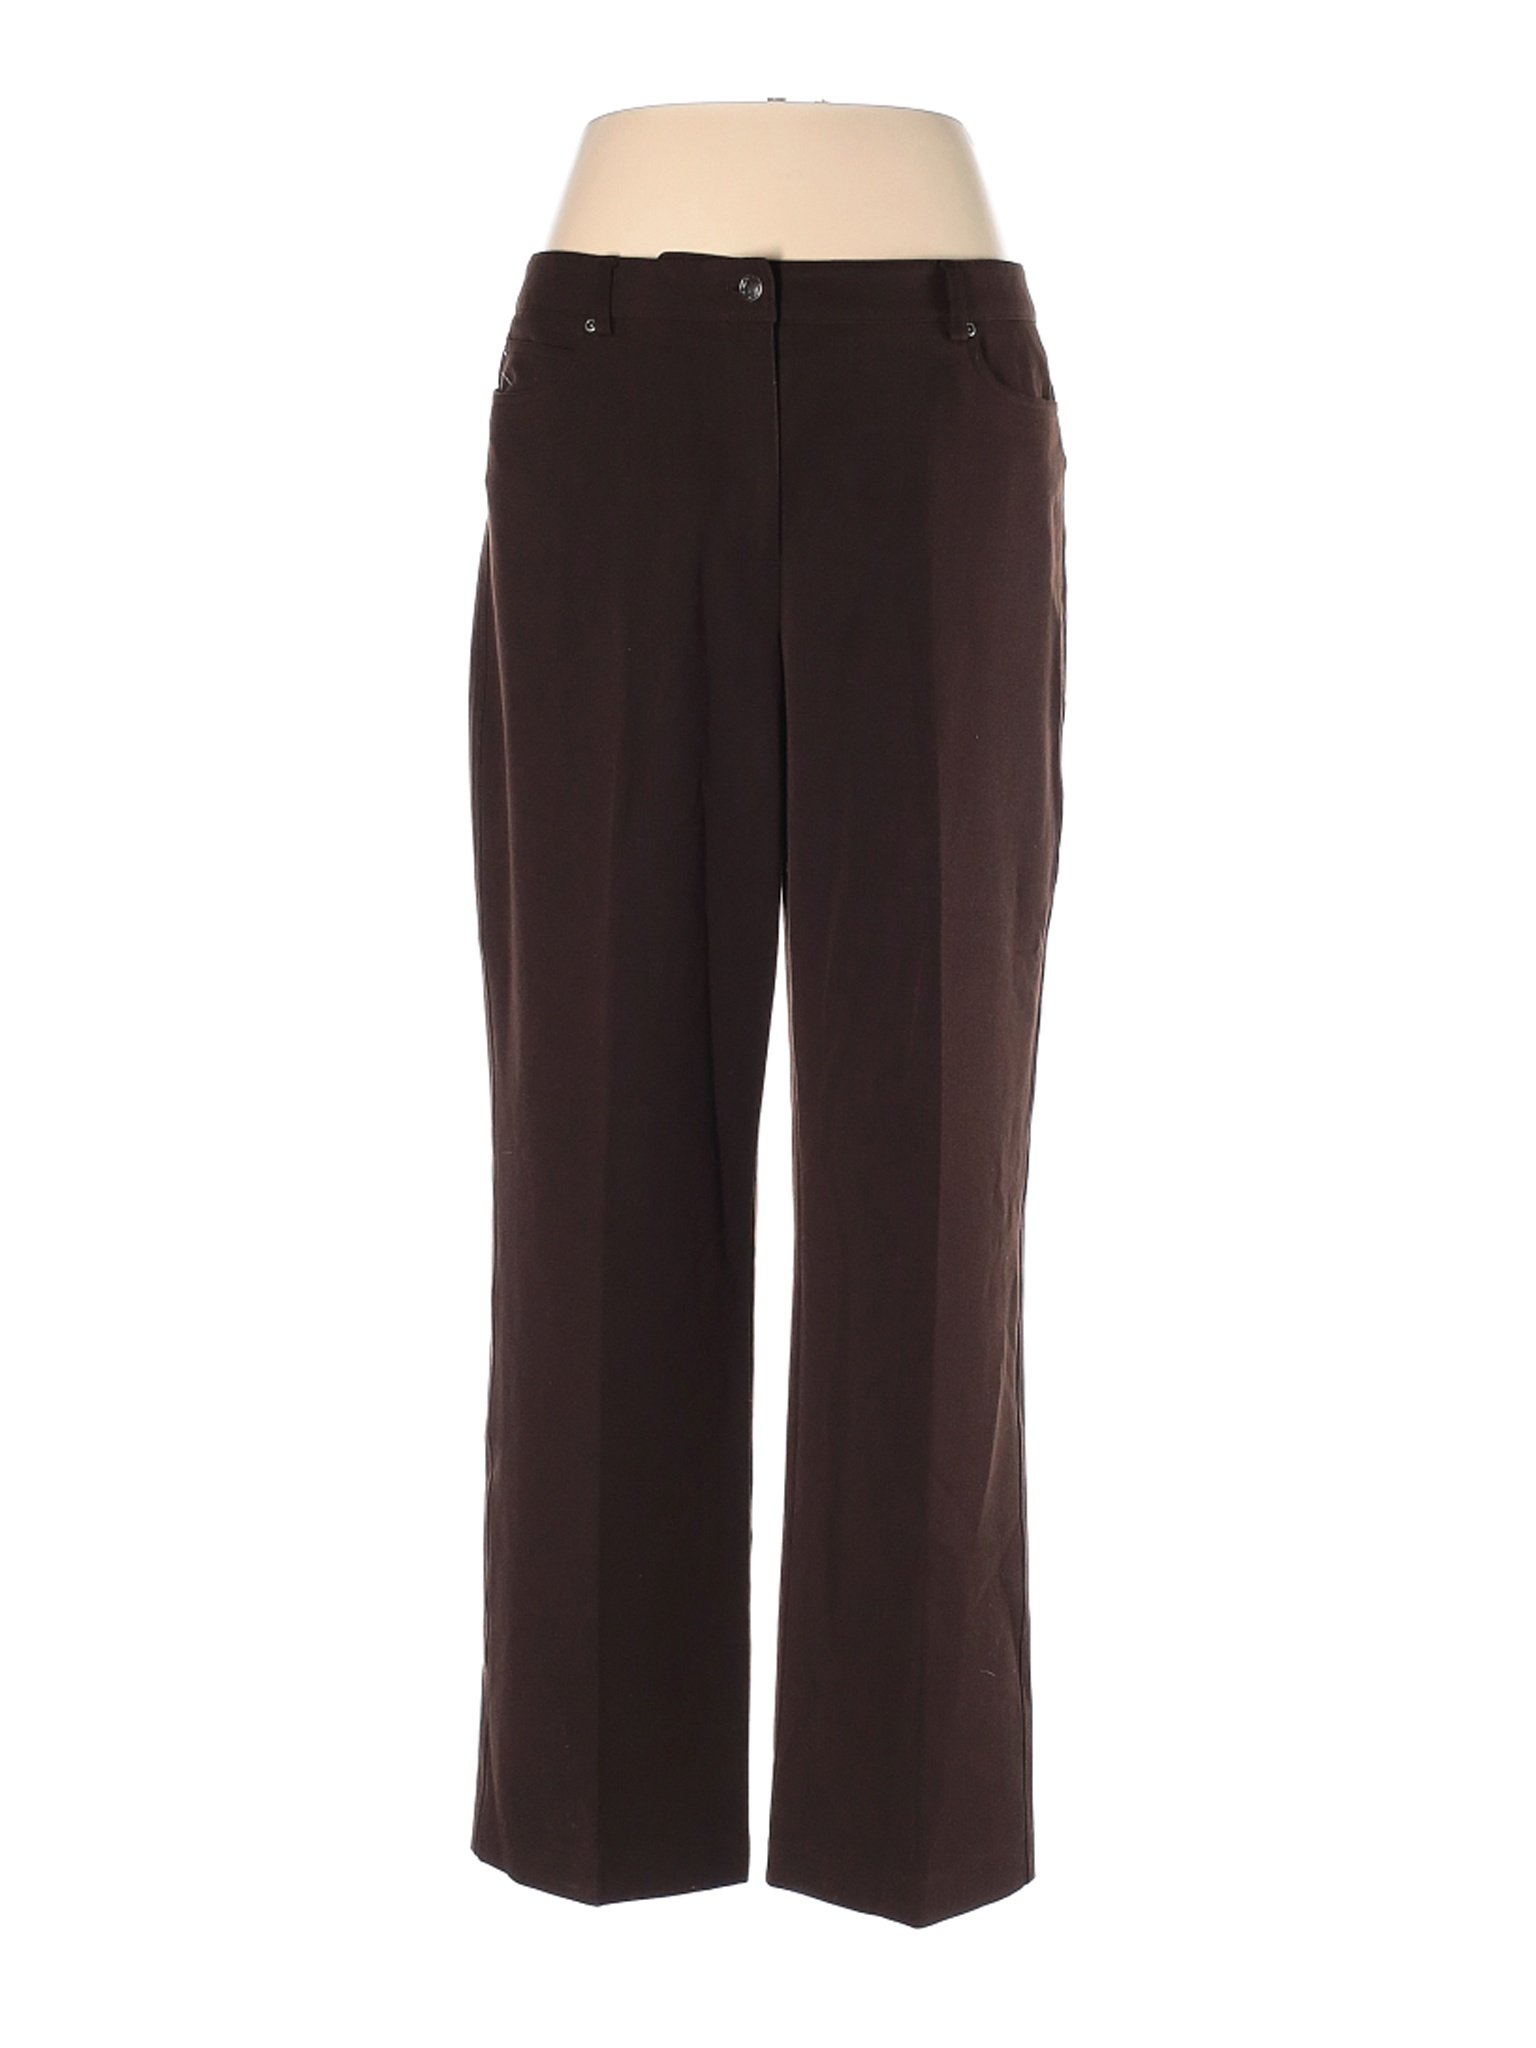 Rafaella Women Brown Casual Pants 14 | eBay